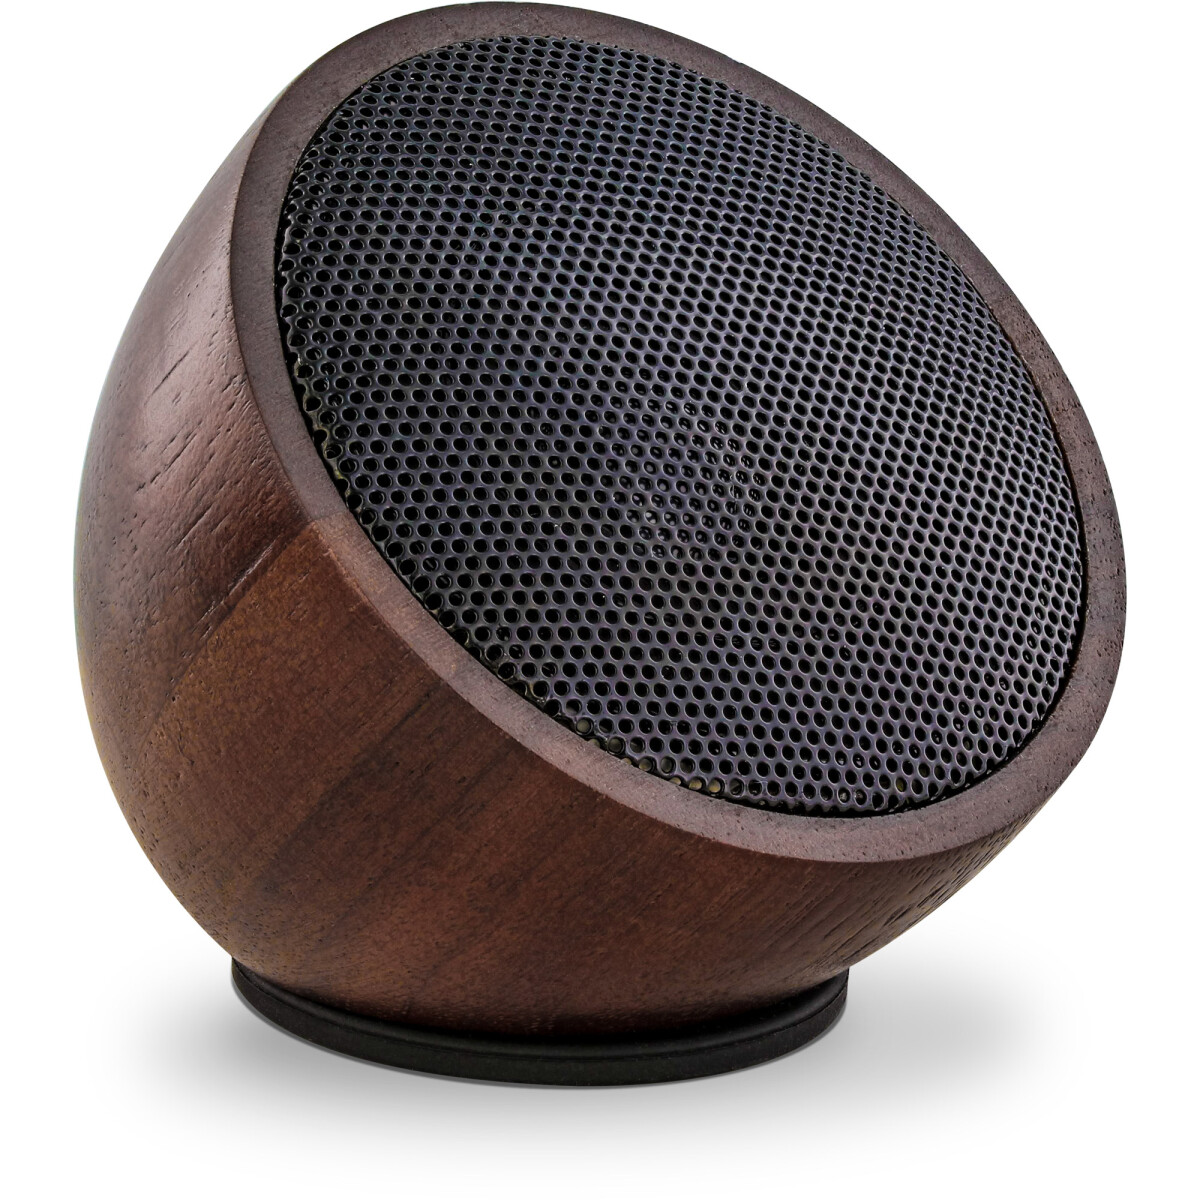 InLine® woodwoom, Bluetooth walnut wooden speaker, 52mm